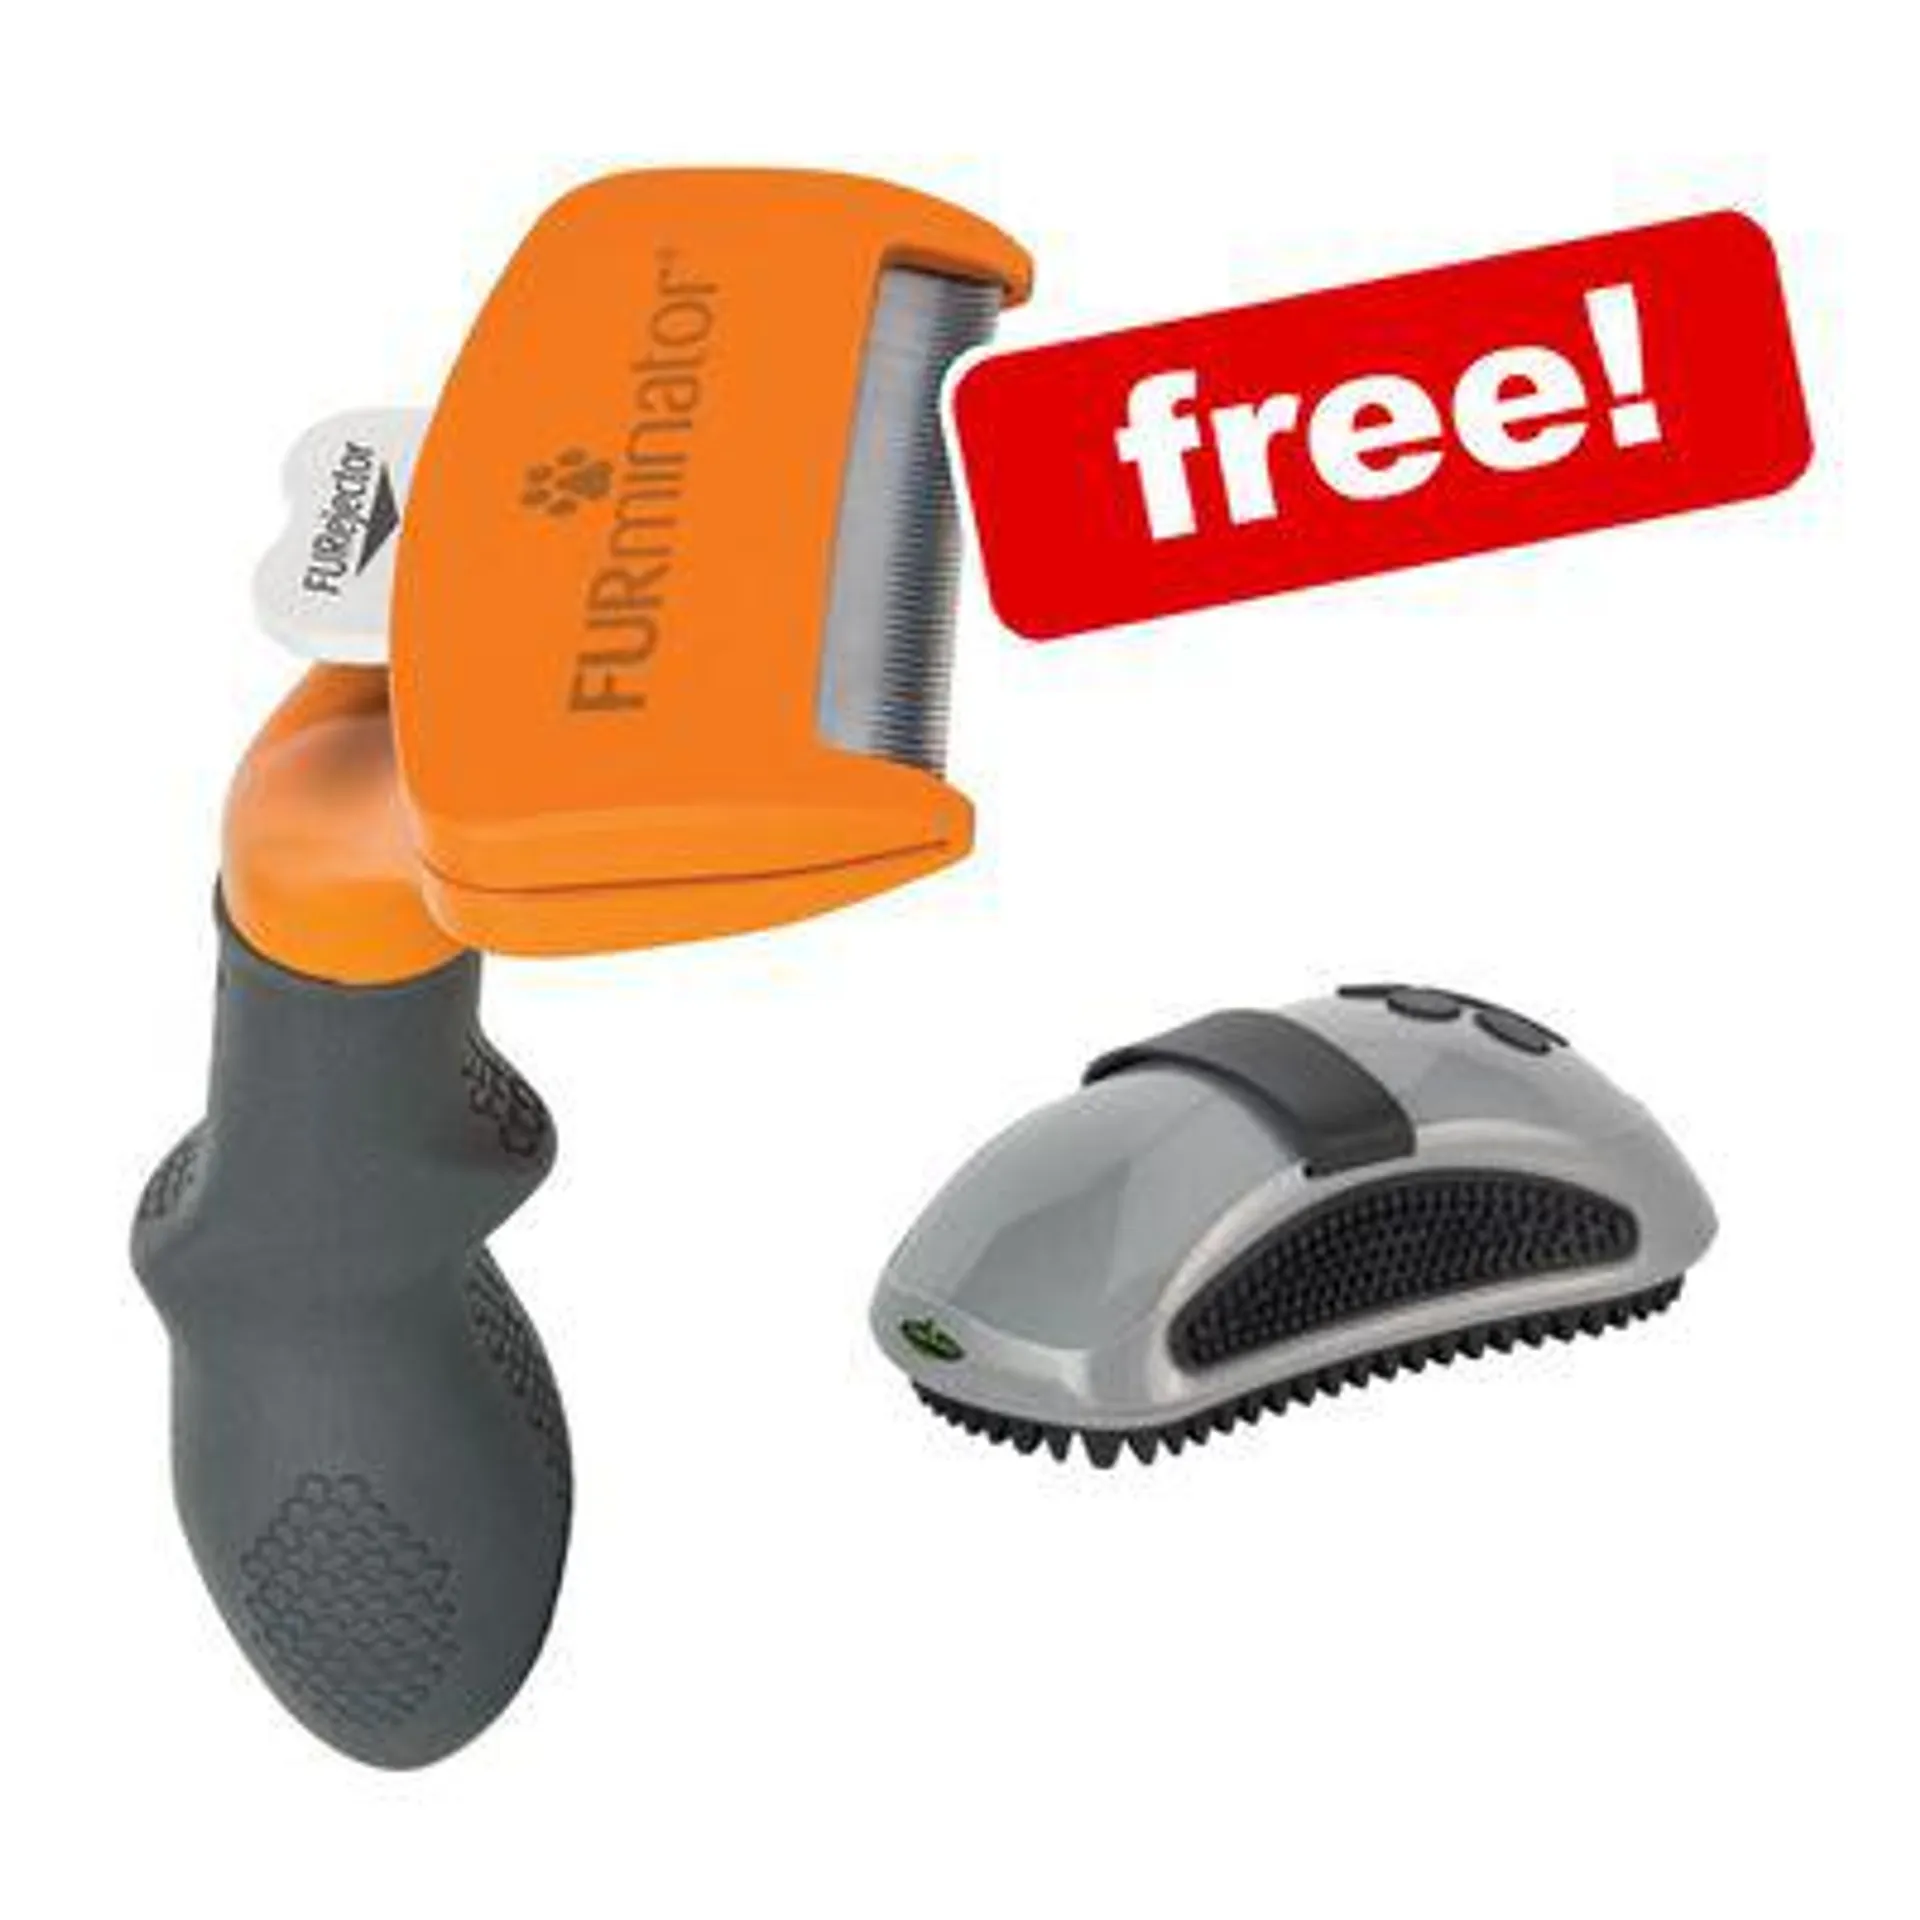 FURminator Dog Grooming Tools + Curry Comb Free! *